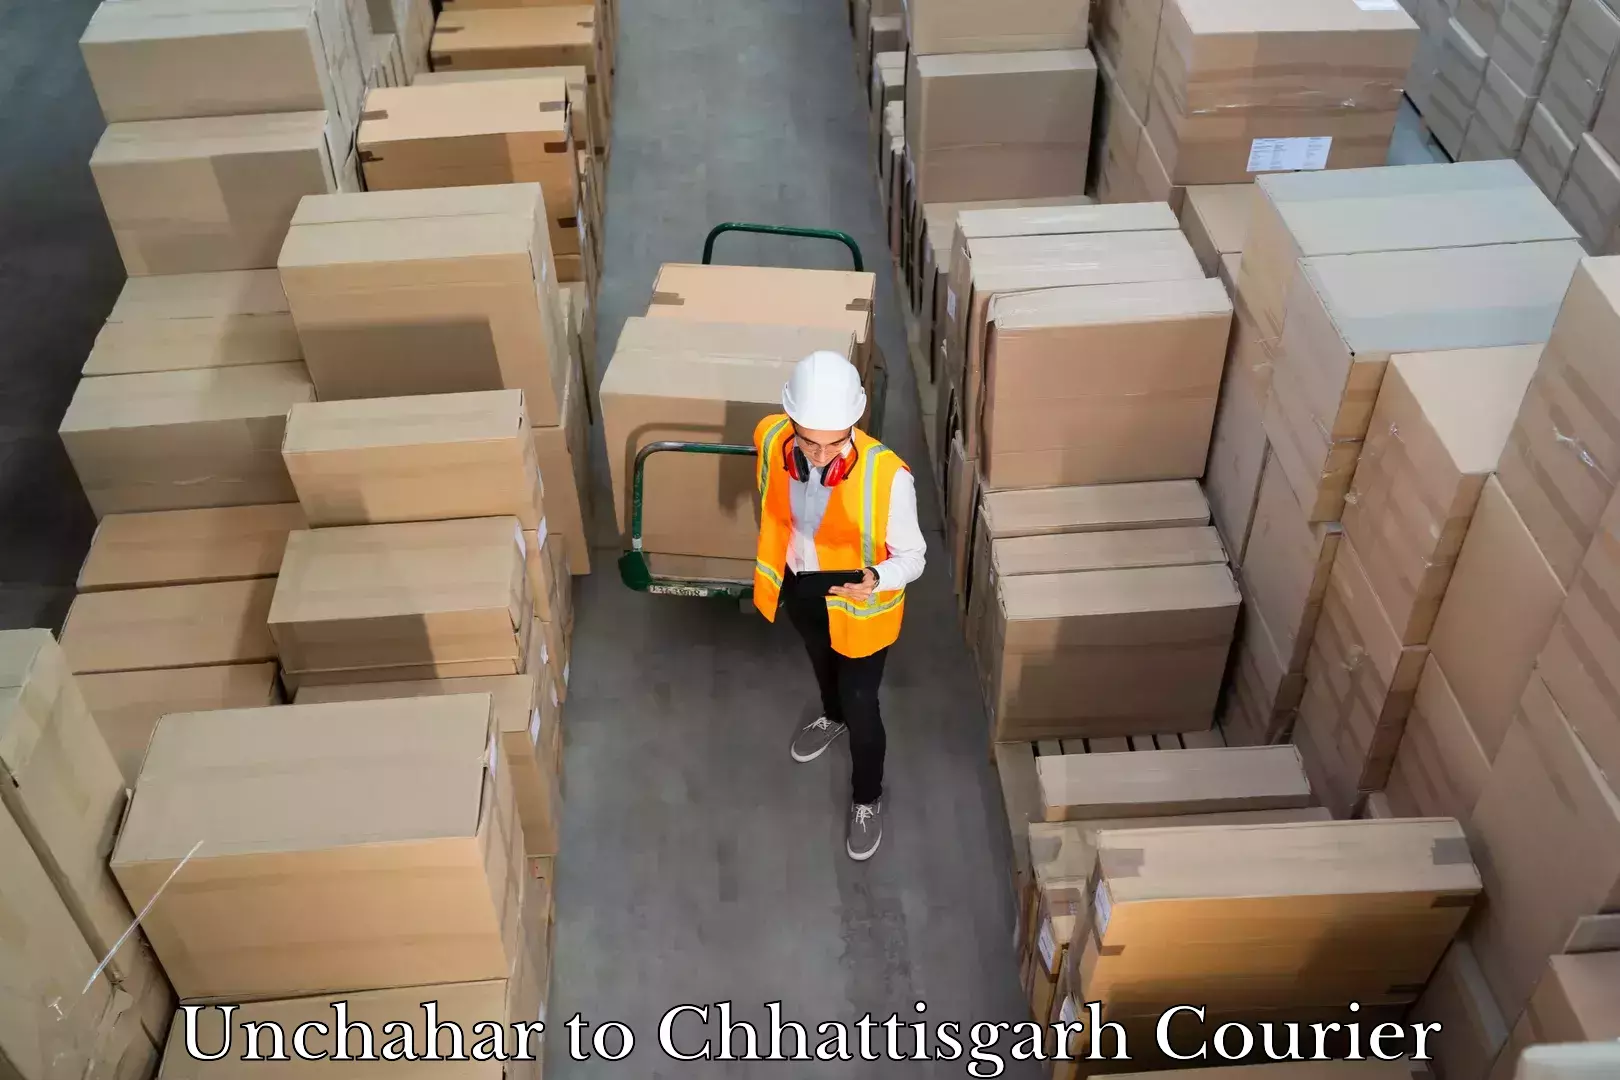 Hassle-free luggage shipping Unchahar to Korea Chhattisgarh